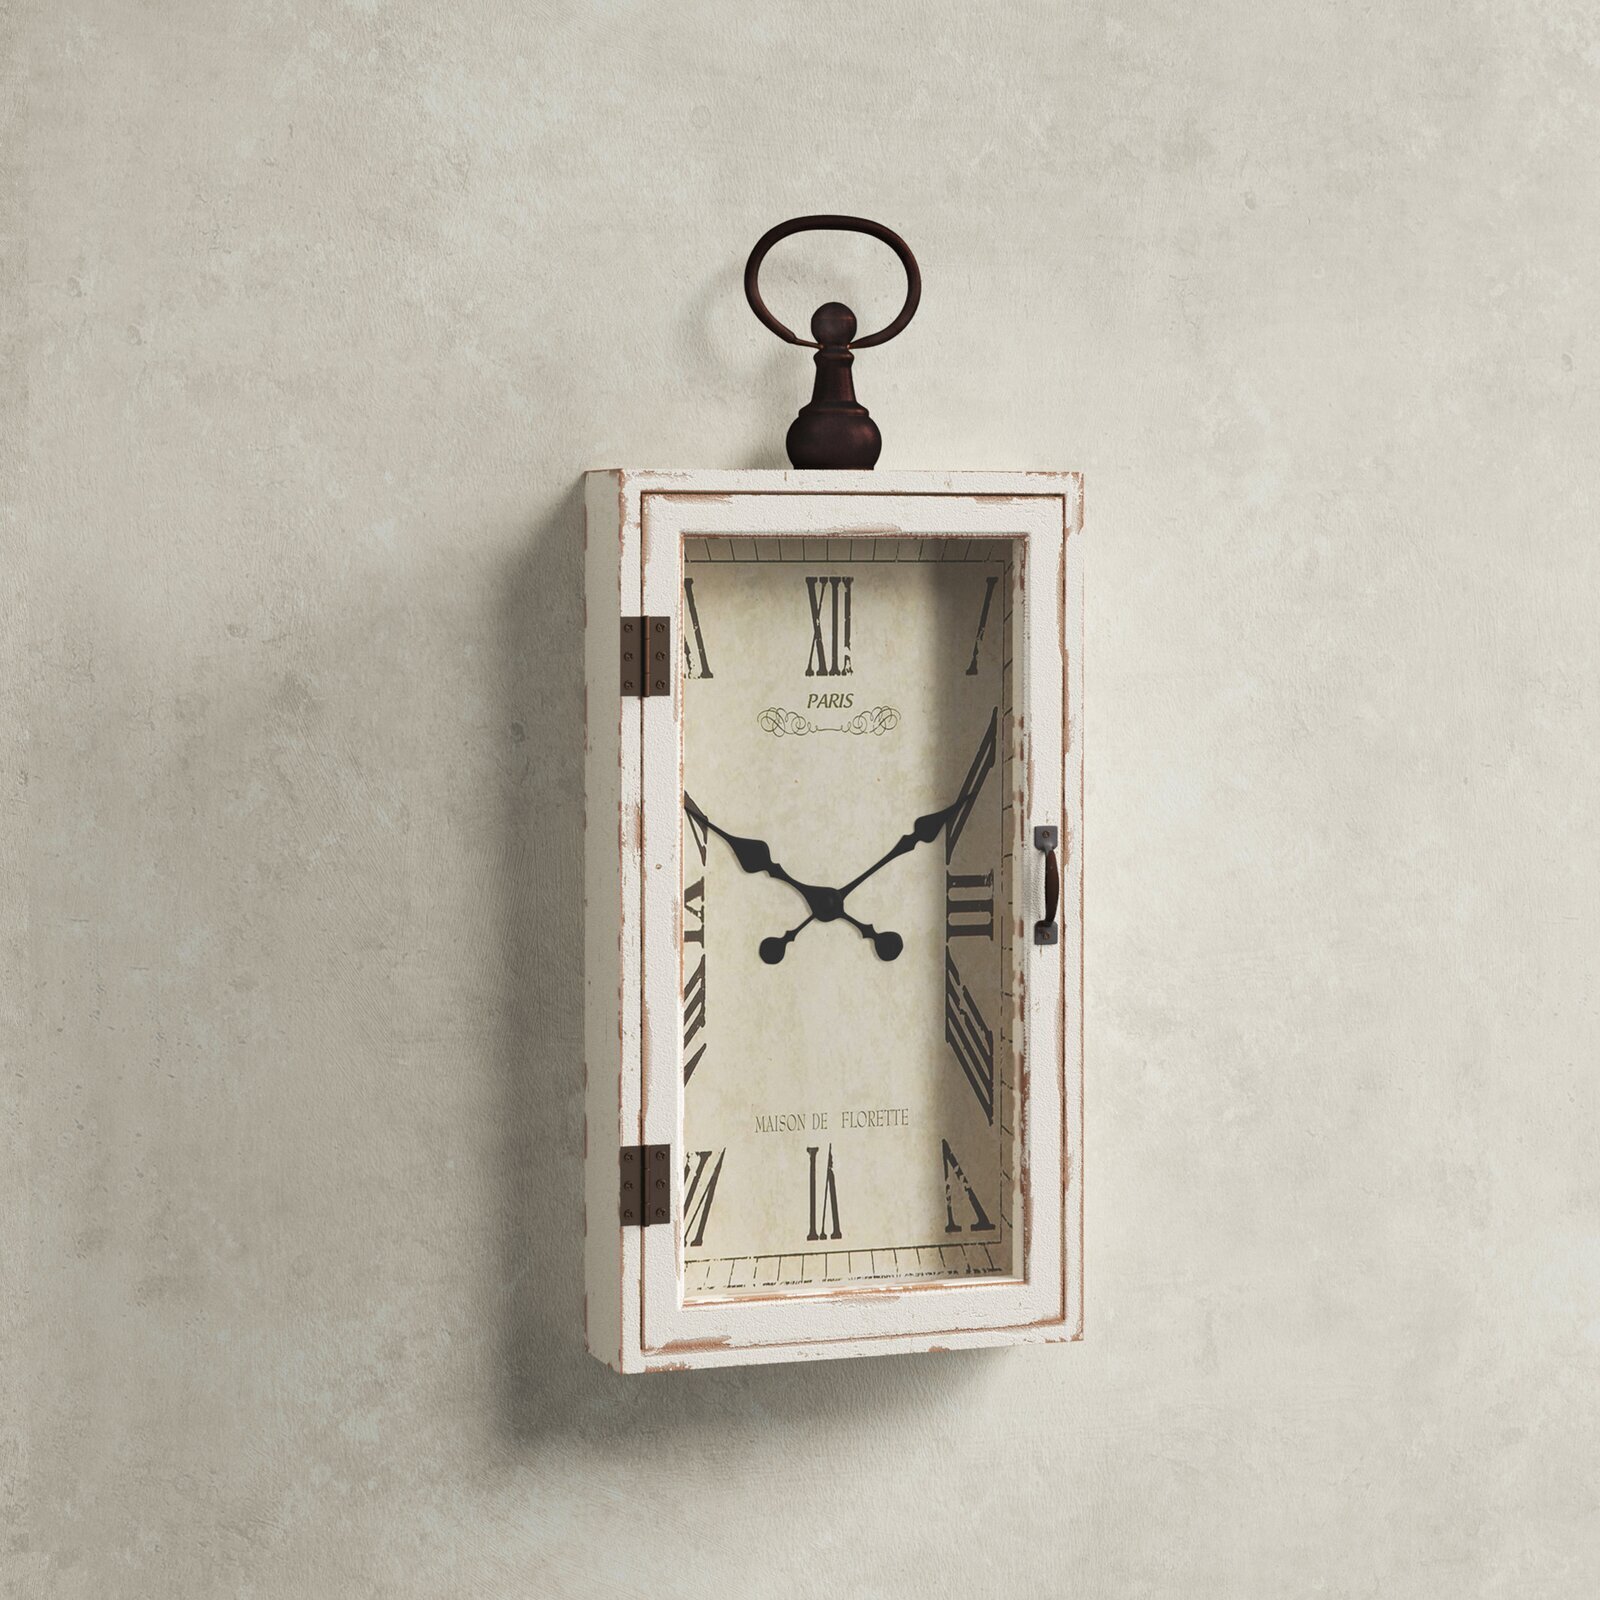 Rectangular retro wall clock